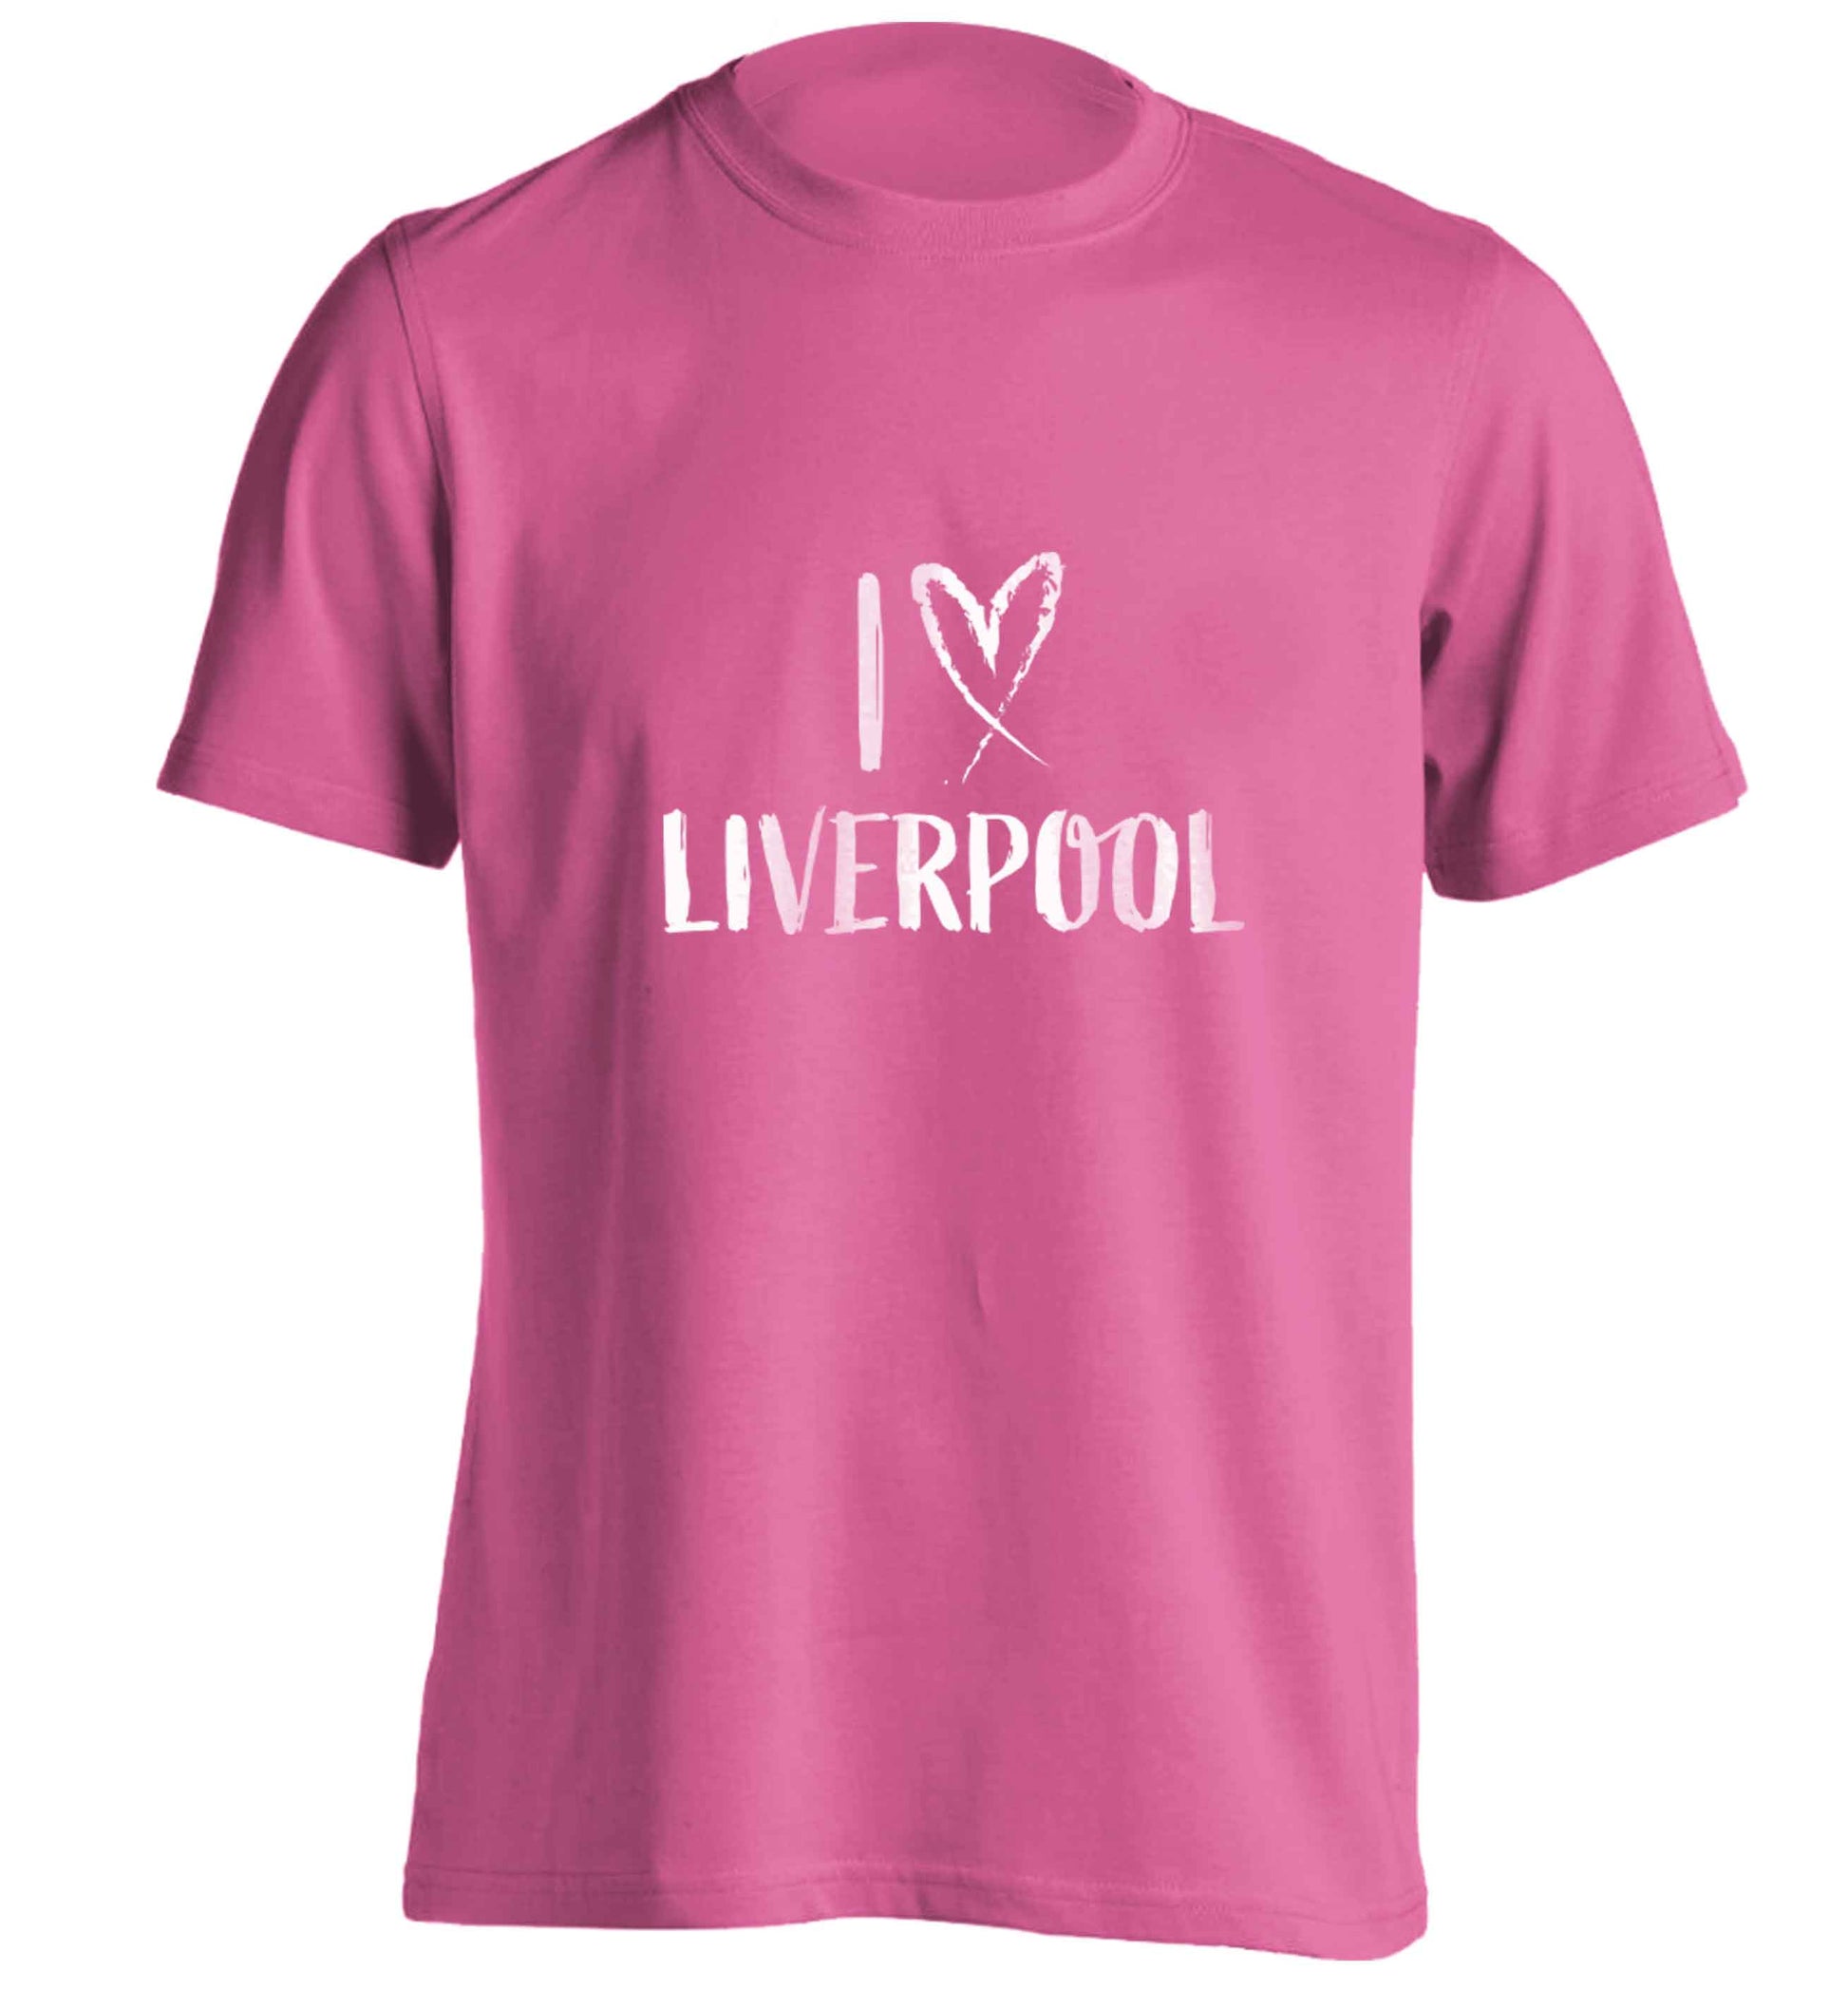 I love Liverpool adults unisex pink Tshirt 2XL